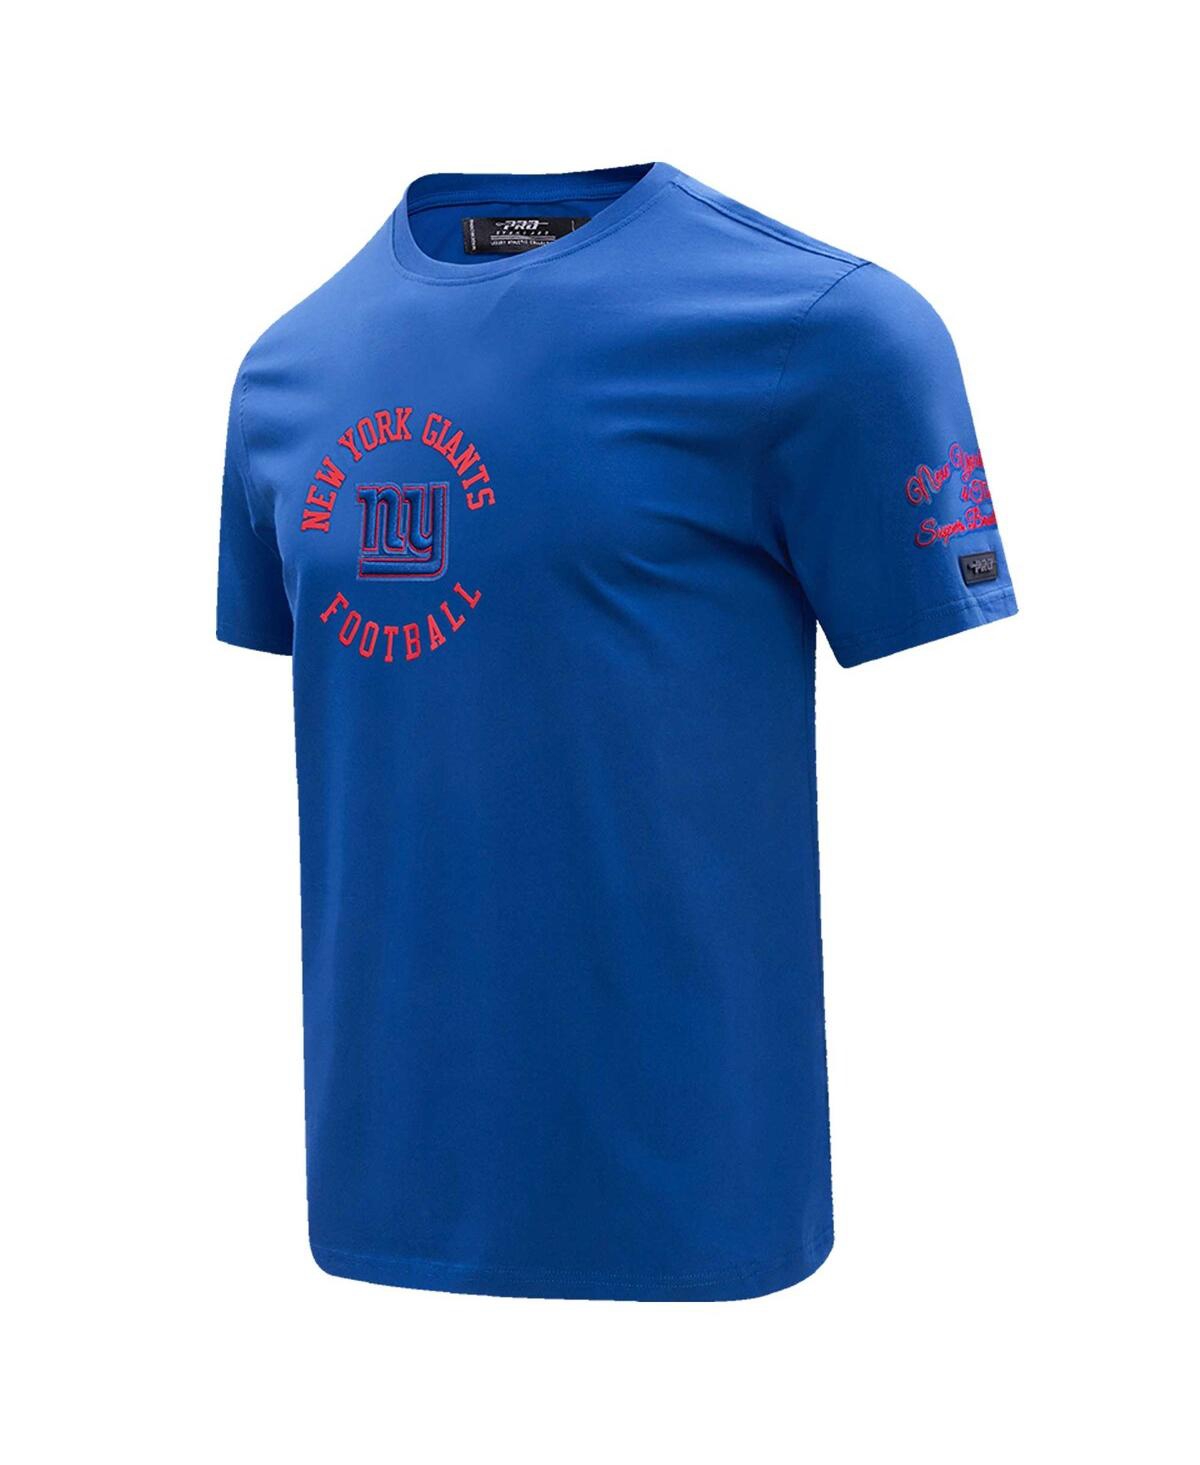 Shop Pro Standard Men's  Royal New York Giants Hybrid T-shirt